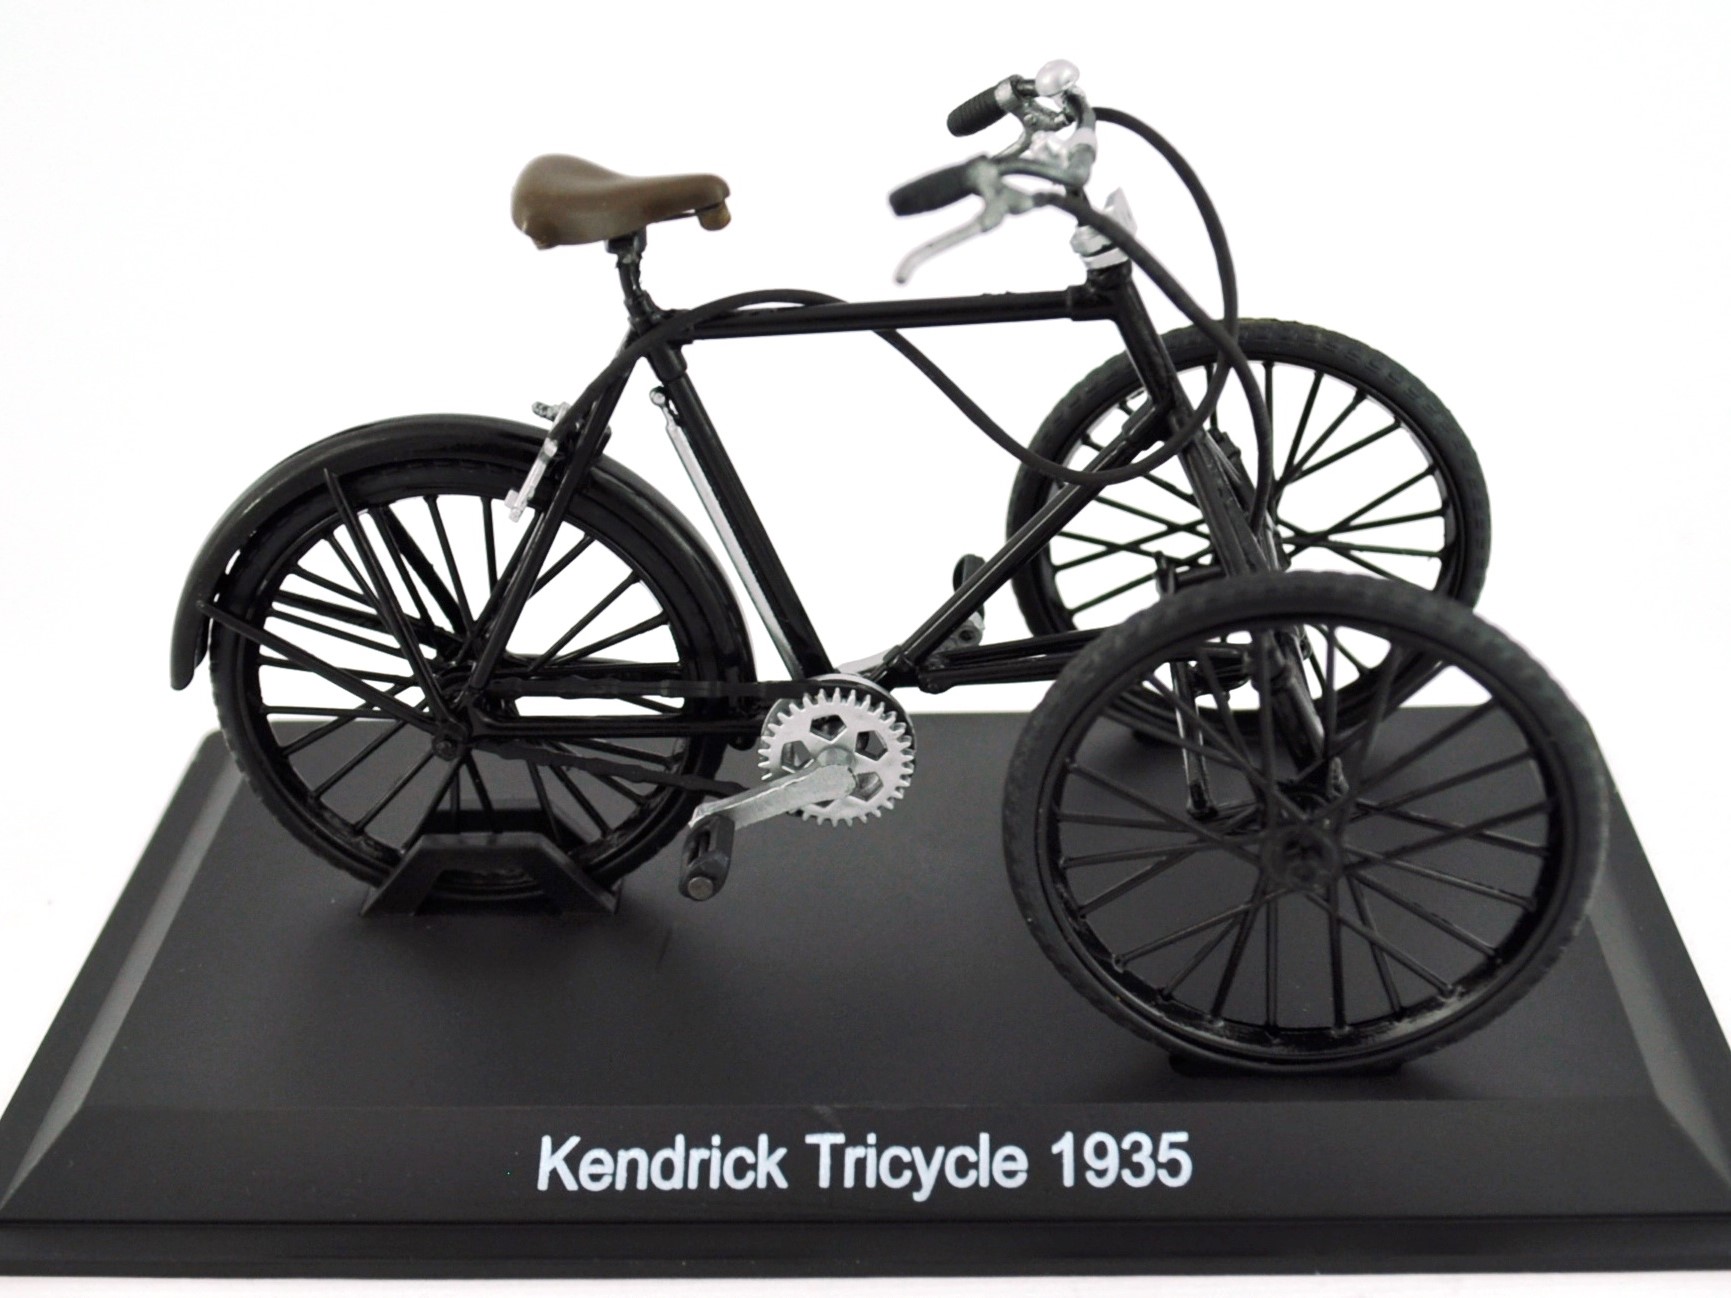 Kendrick Tricycle